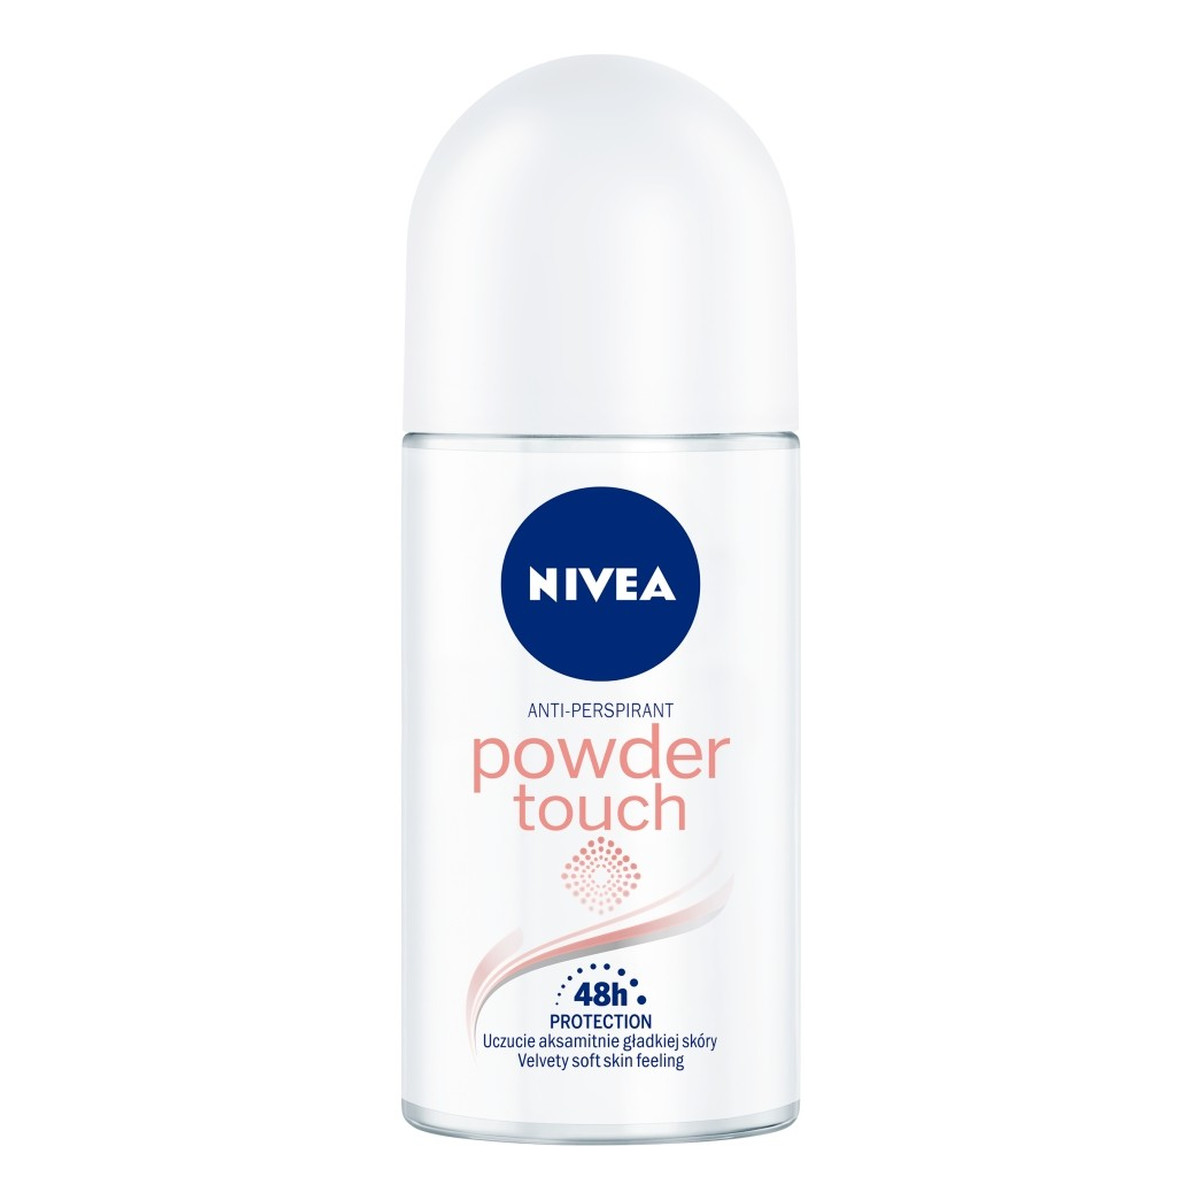 Nivea POWDER TOUCH Anti-Perspirant roll-on 50ml